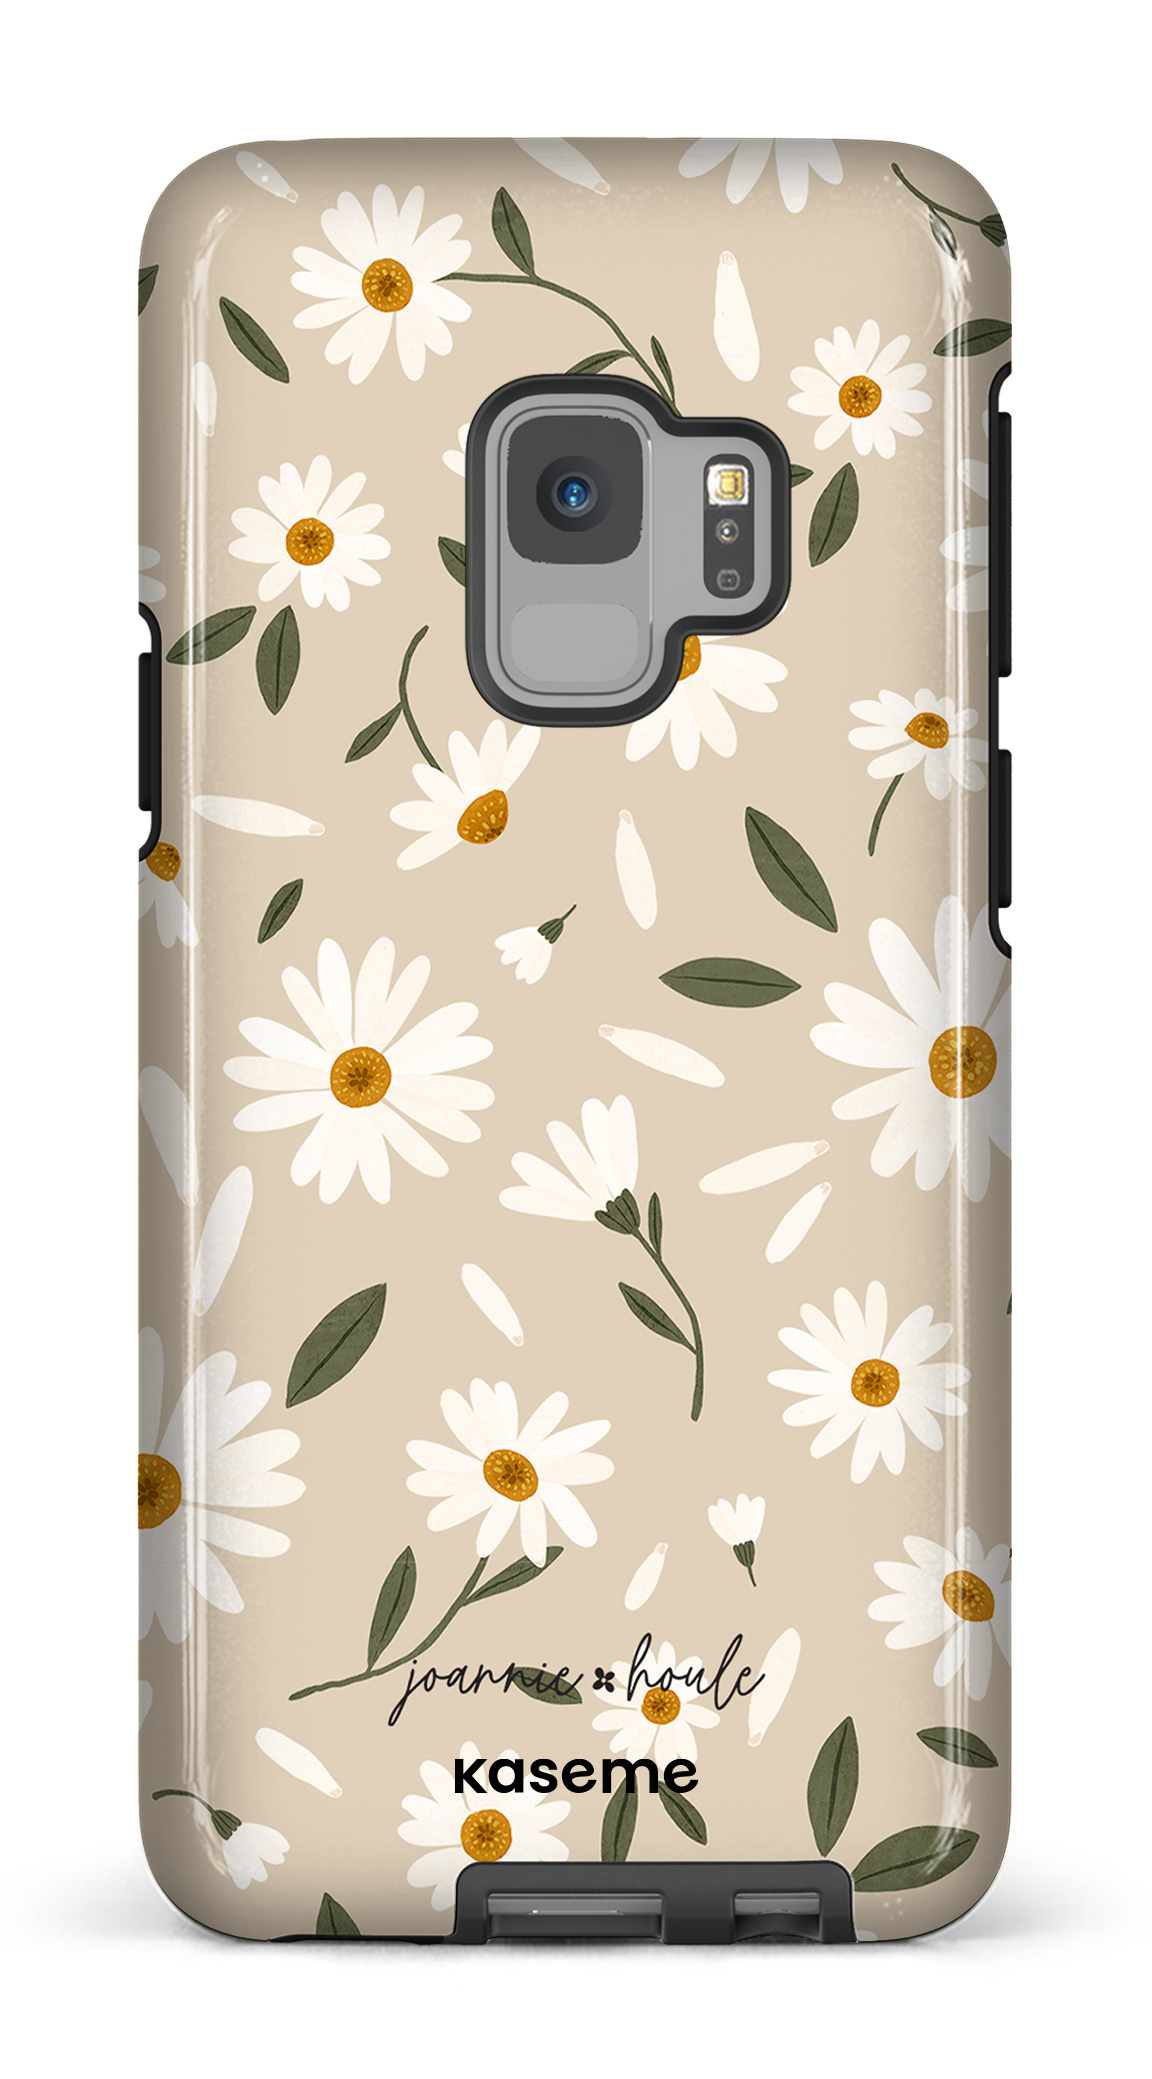 Daisy Bouquet by Joannie Houle - Galaxy S9